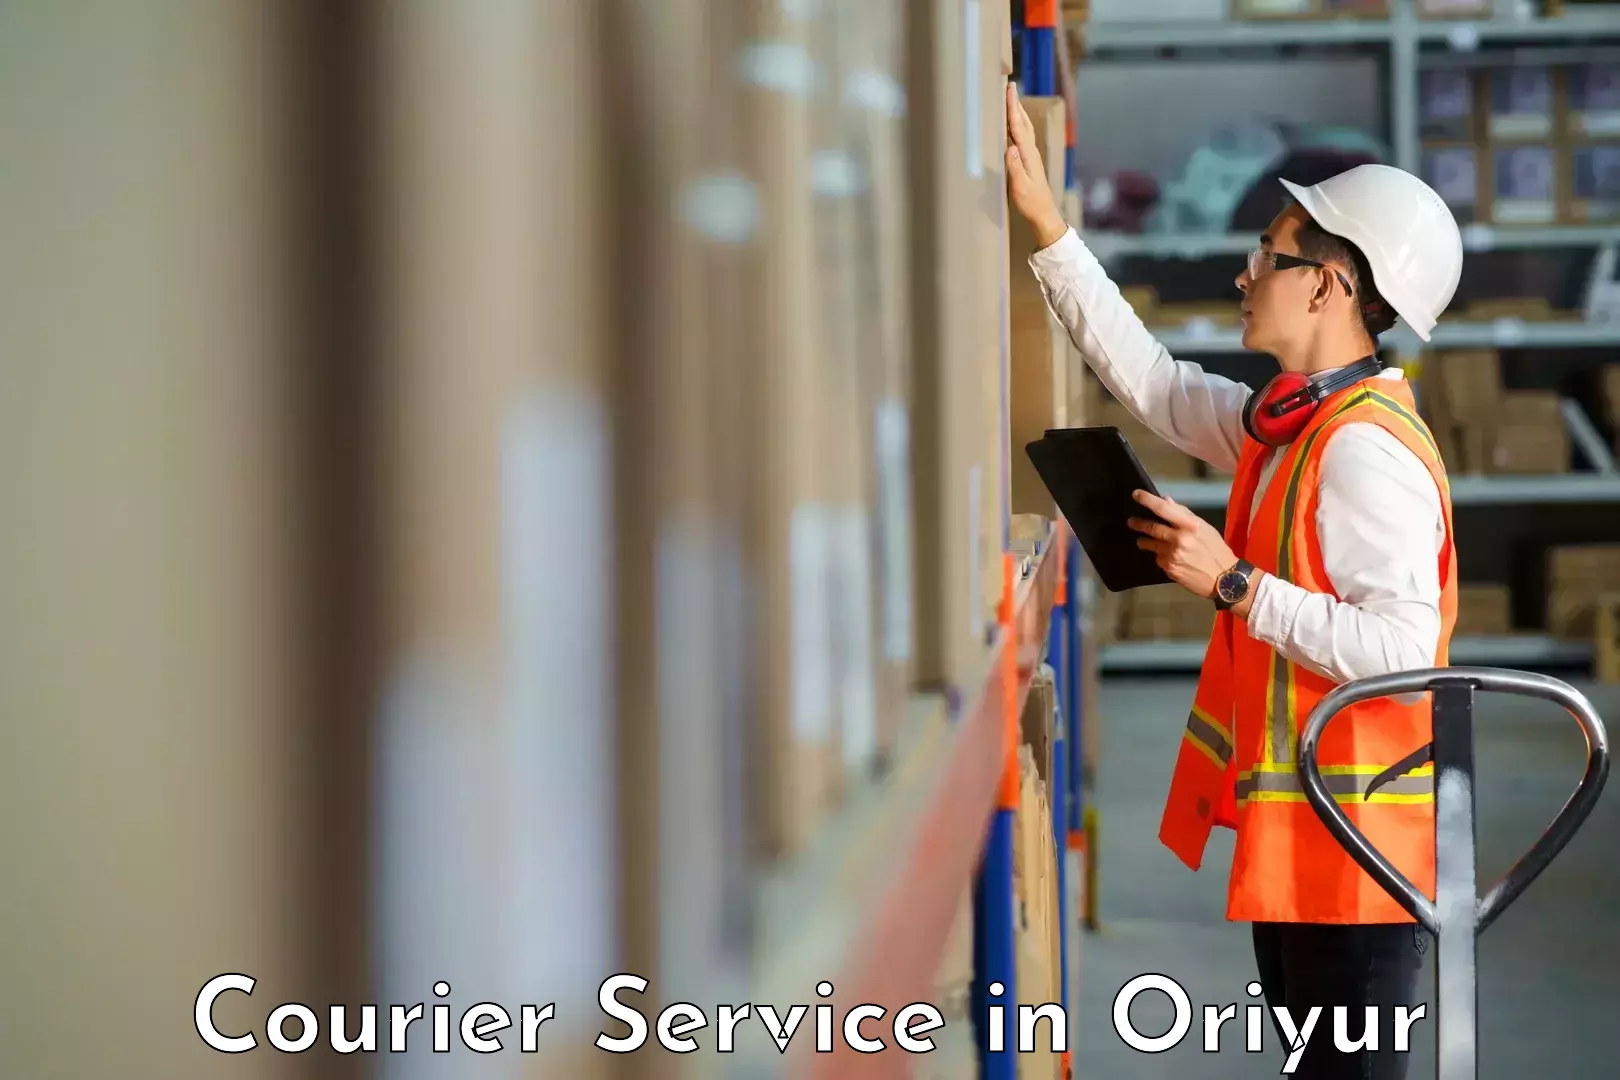 Doorstep delivery service in Oriyur